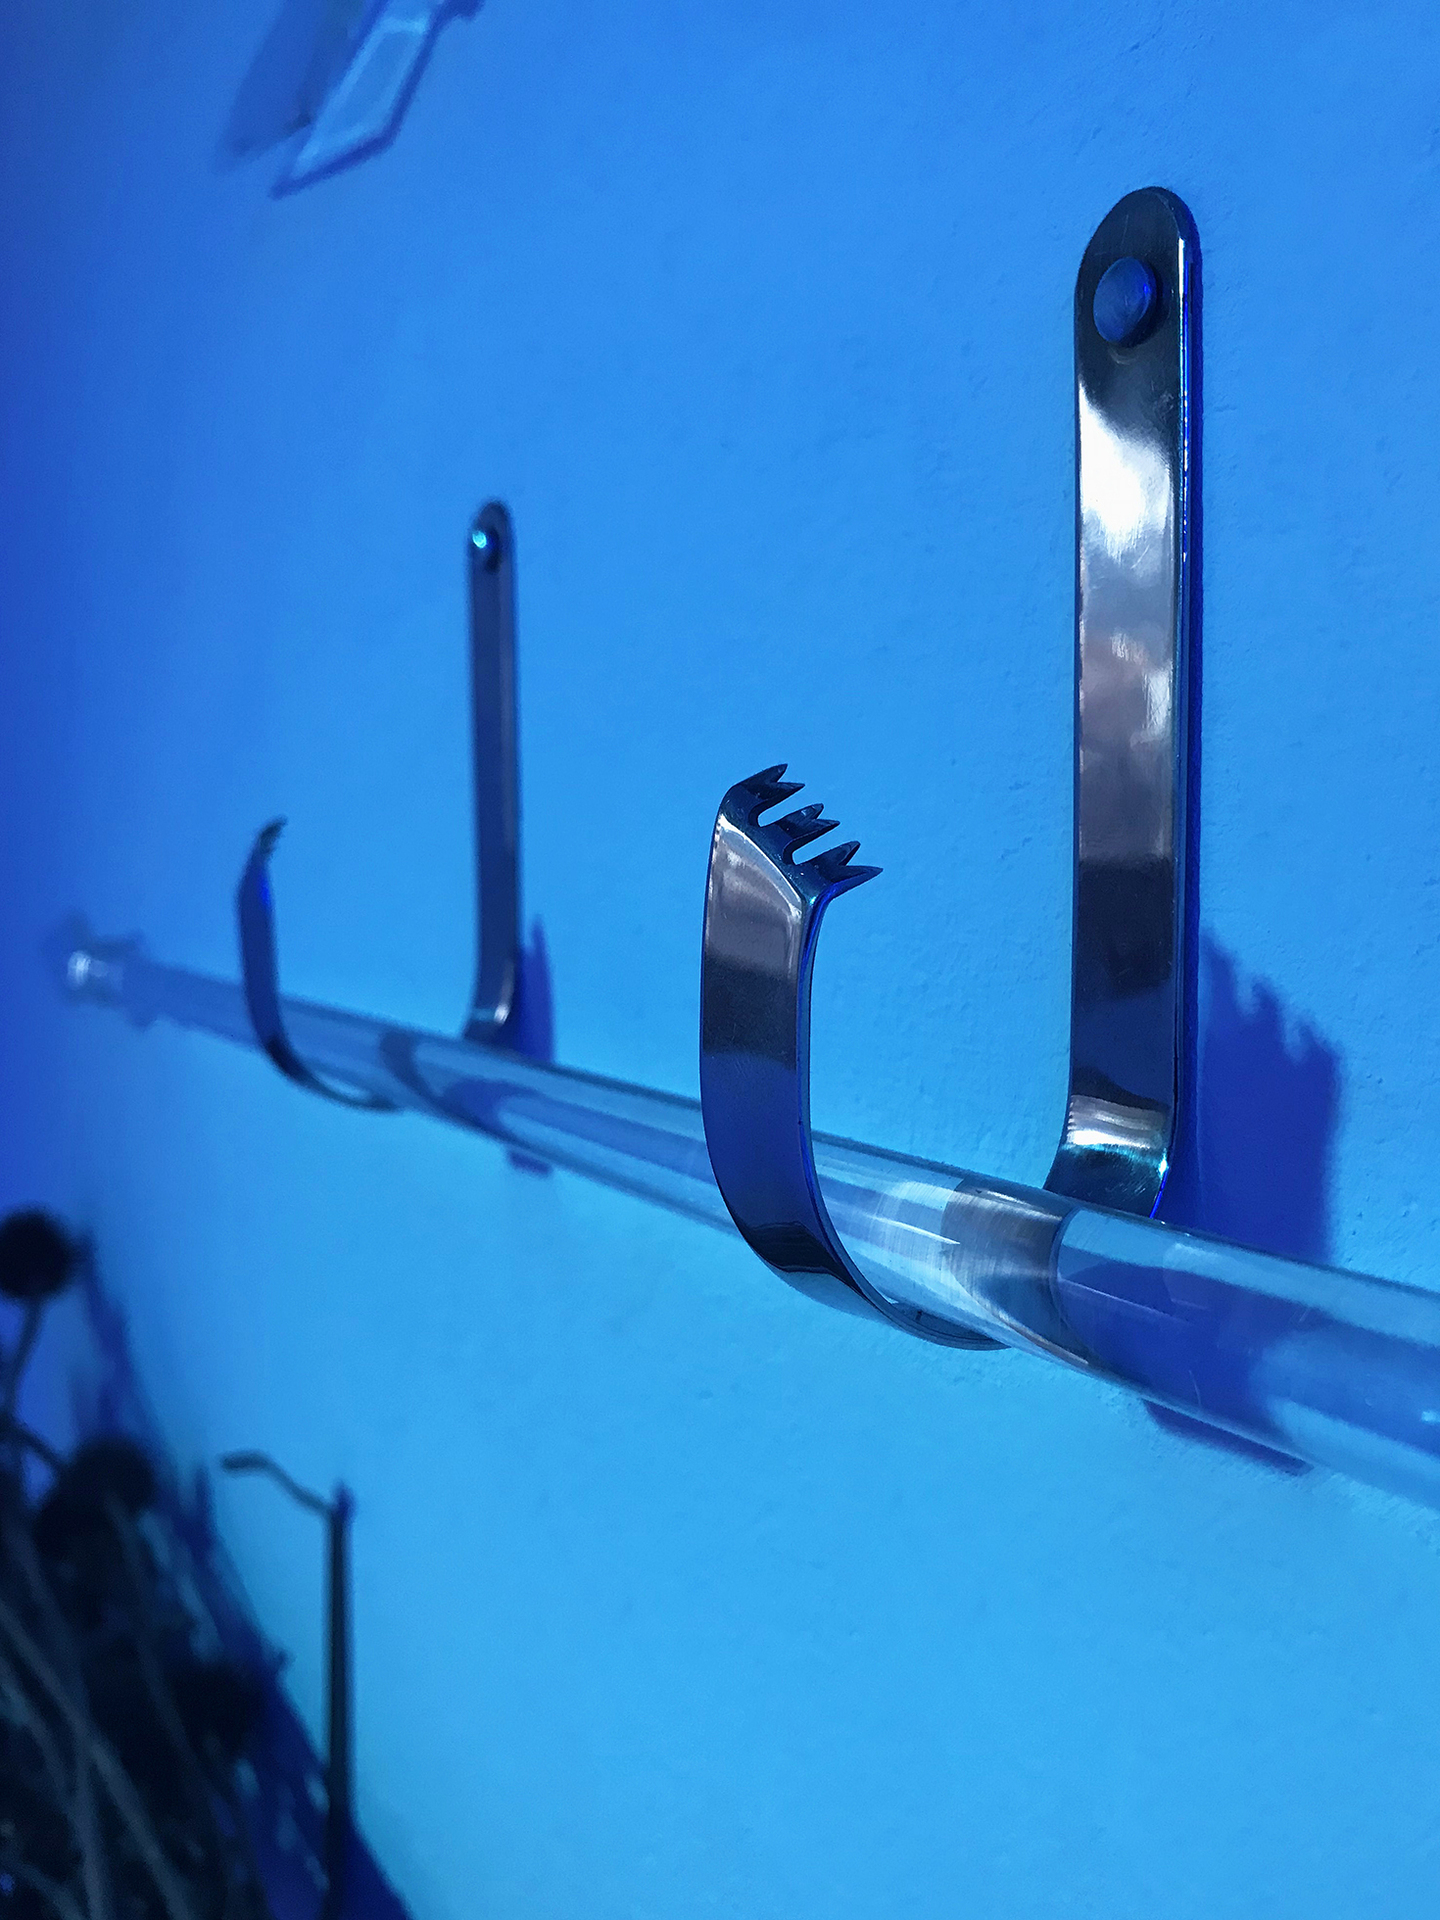 Floryan Varennes, Panoply 2.0 (ensemble), 2020 Double glass arrows, medical spacers, echinacea purpurea, steel chains, blue light. Collaboration: Cardis Glass Works, Switzerland. 130 x 140 cm